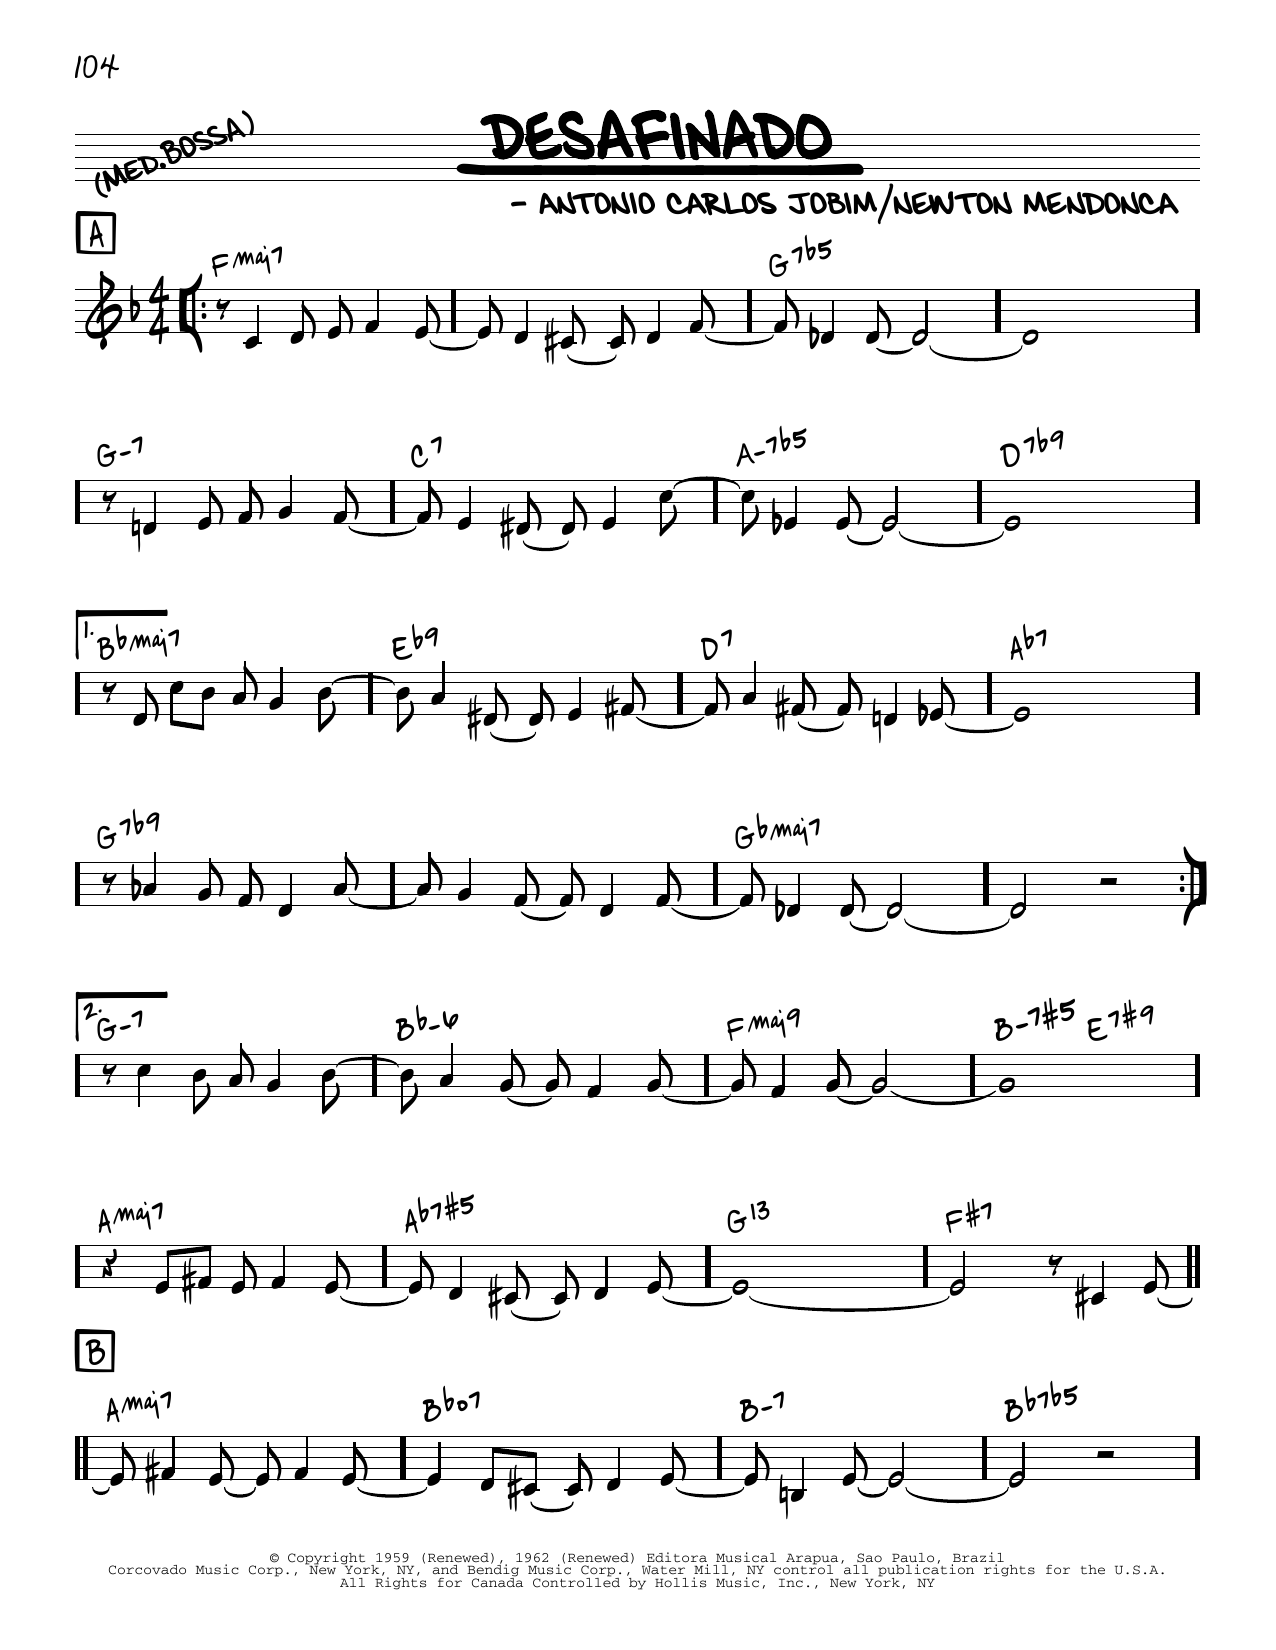 Antonio Carlos Jobim Desafinado [Reharmonized version] (arr. Jack Grassel) Sheet Music Notes & Chords for Real Book – Melody & Chords - Download or Print PDF